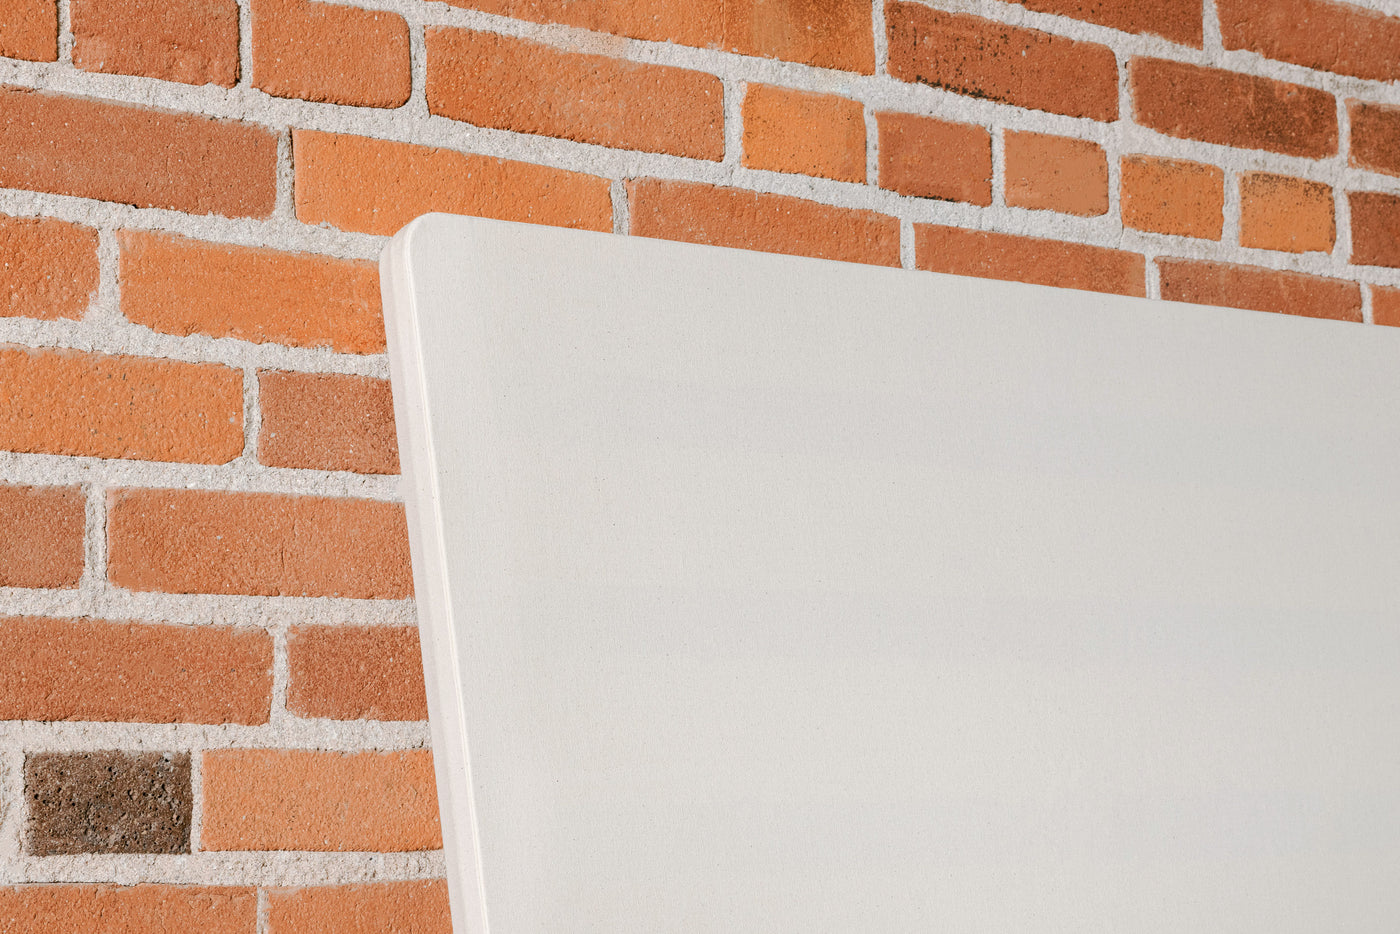 Corner of upholstered bunkie board against brick wall